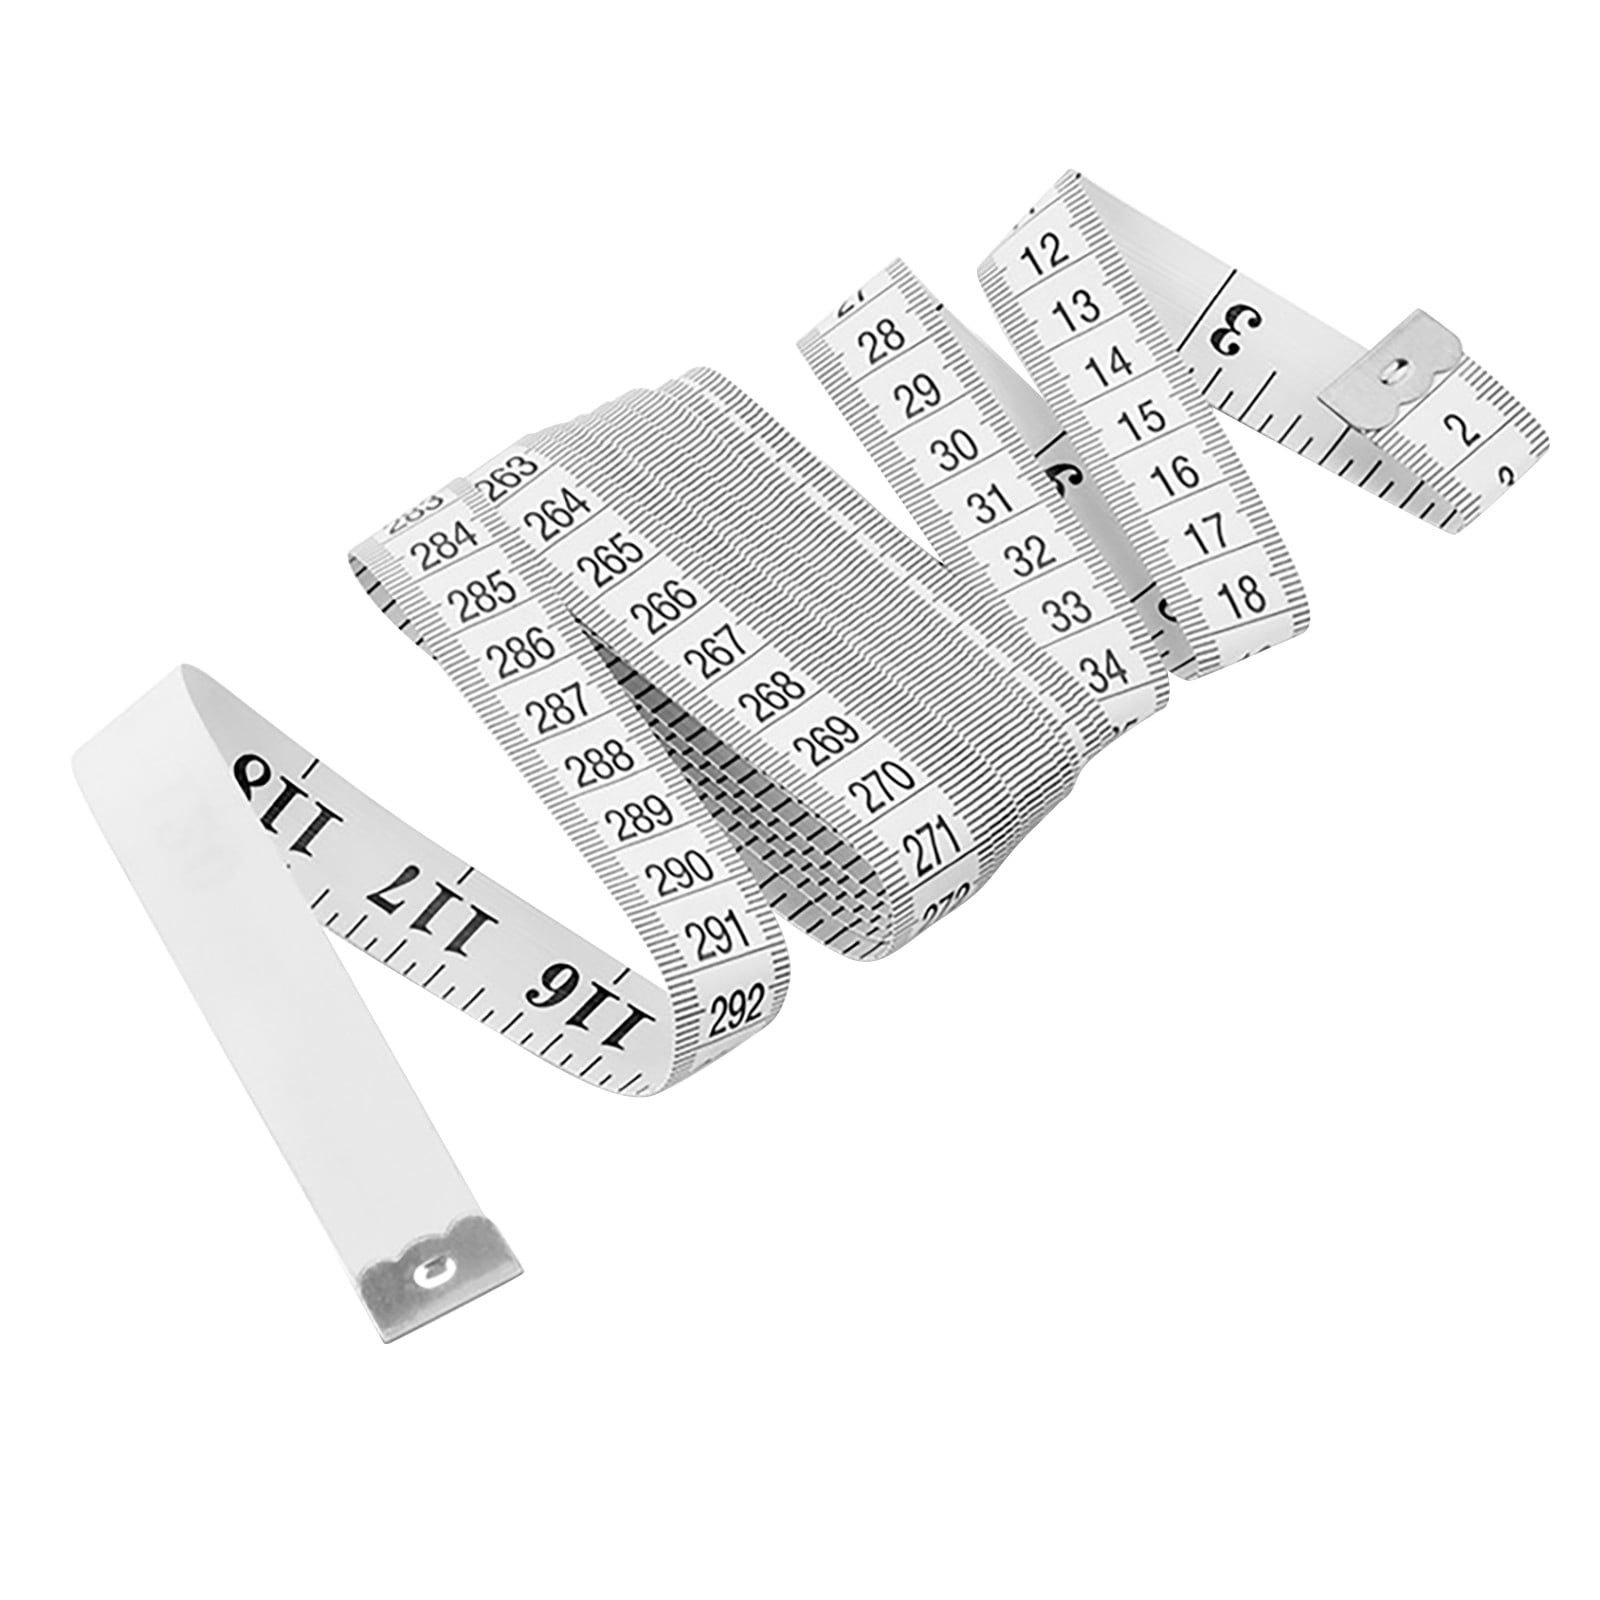 300cm/120 Inch Soft Tape Measurement Sewing Tailor Ruler Centimetre